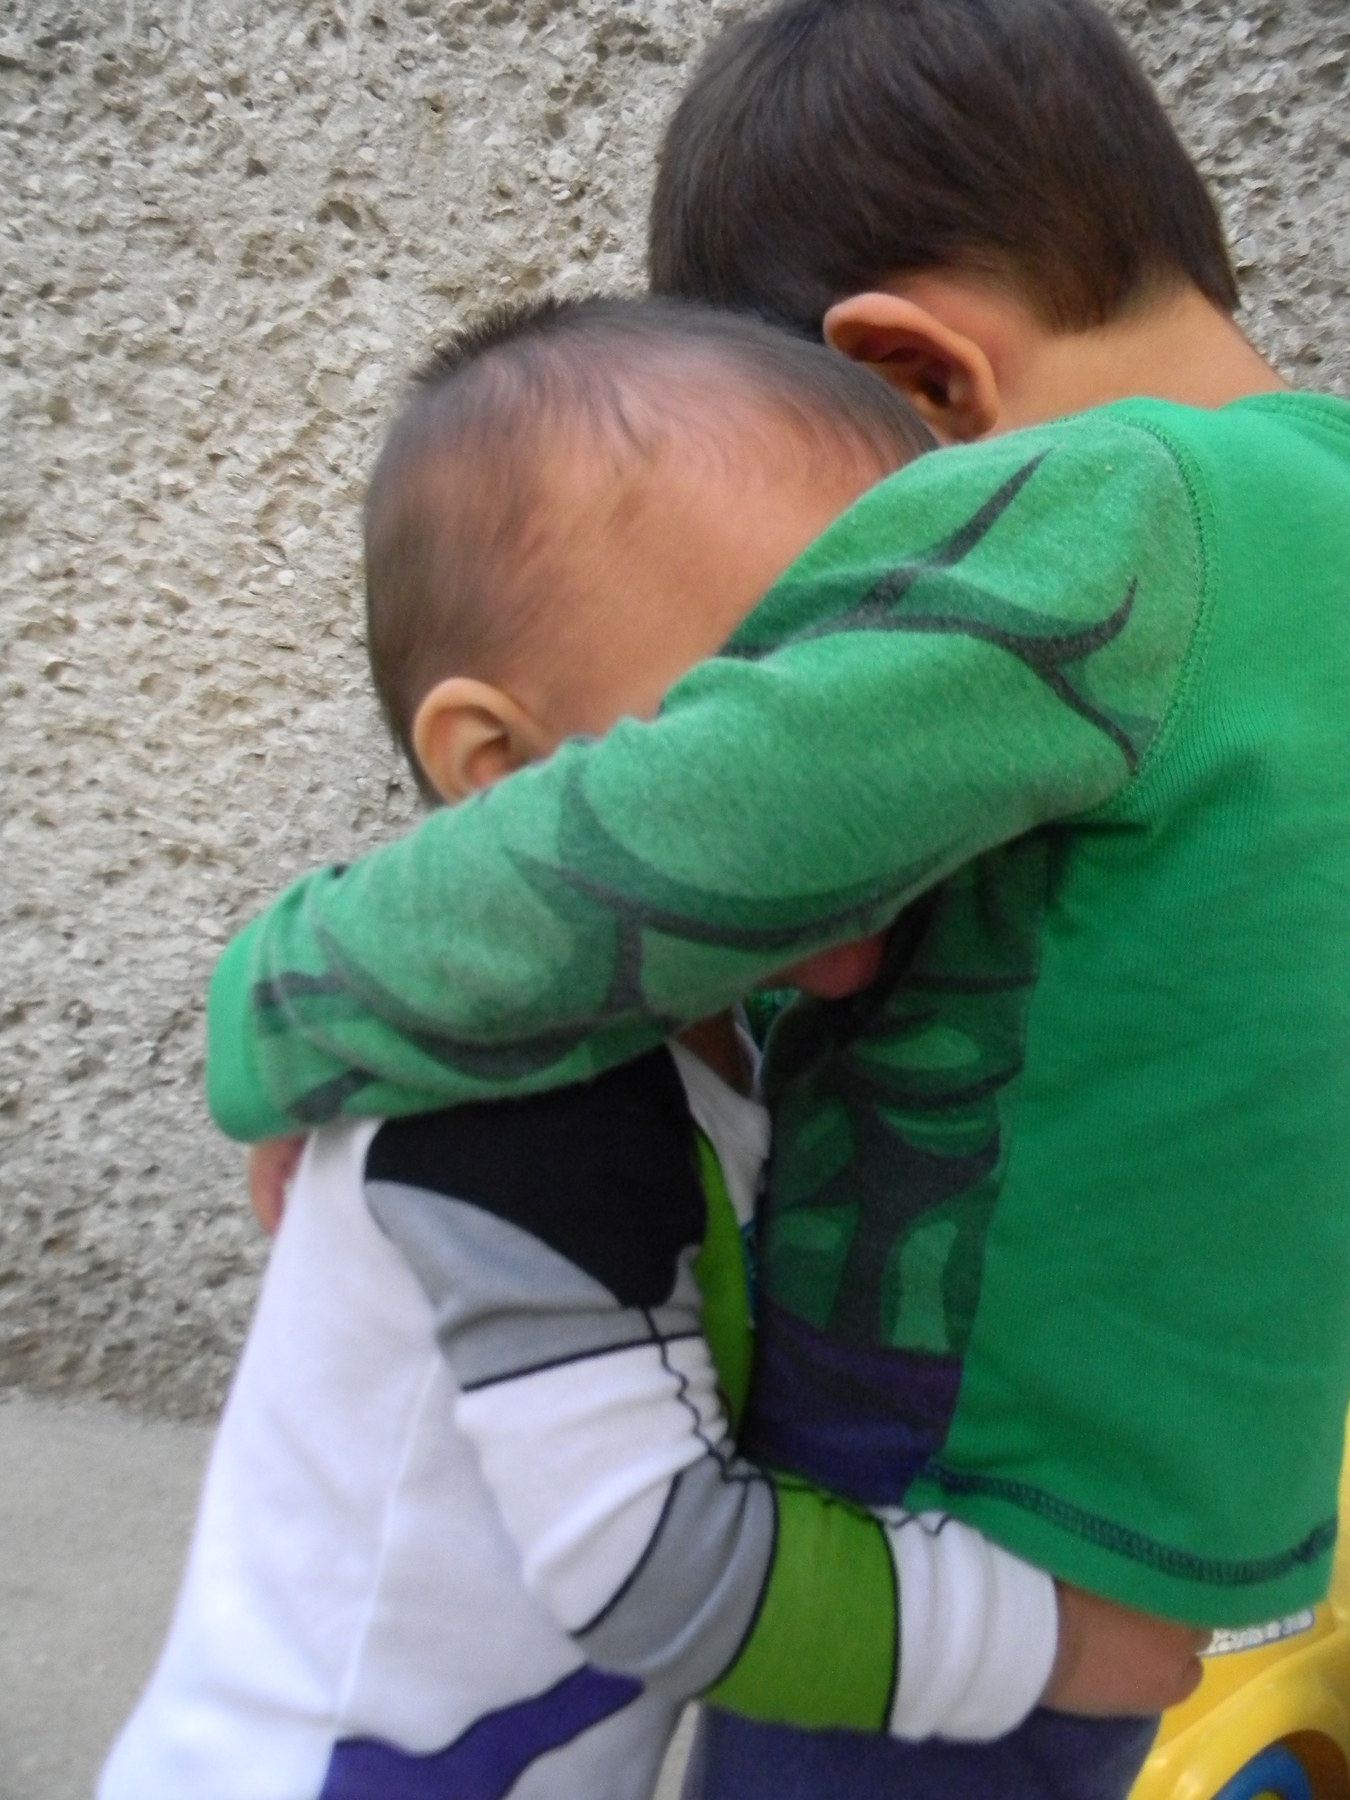 Real superheroes hug their brother